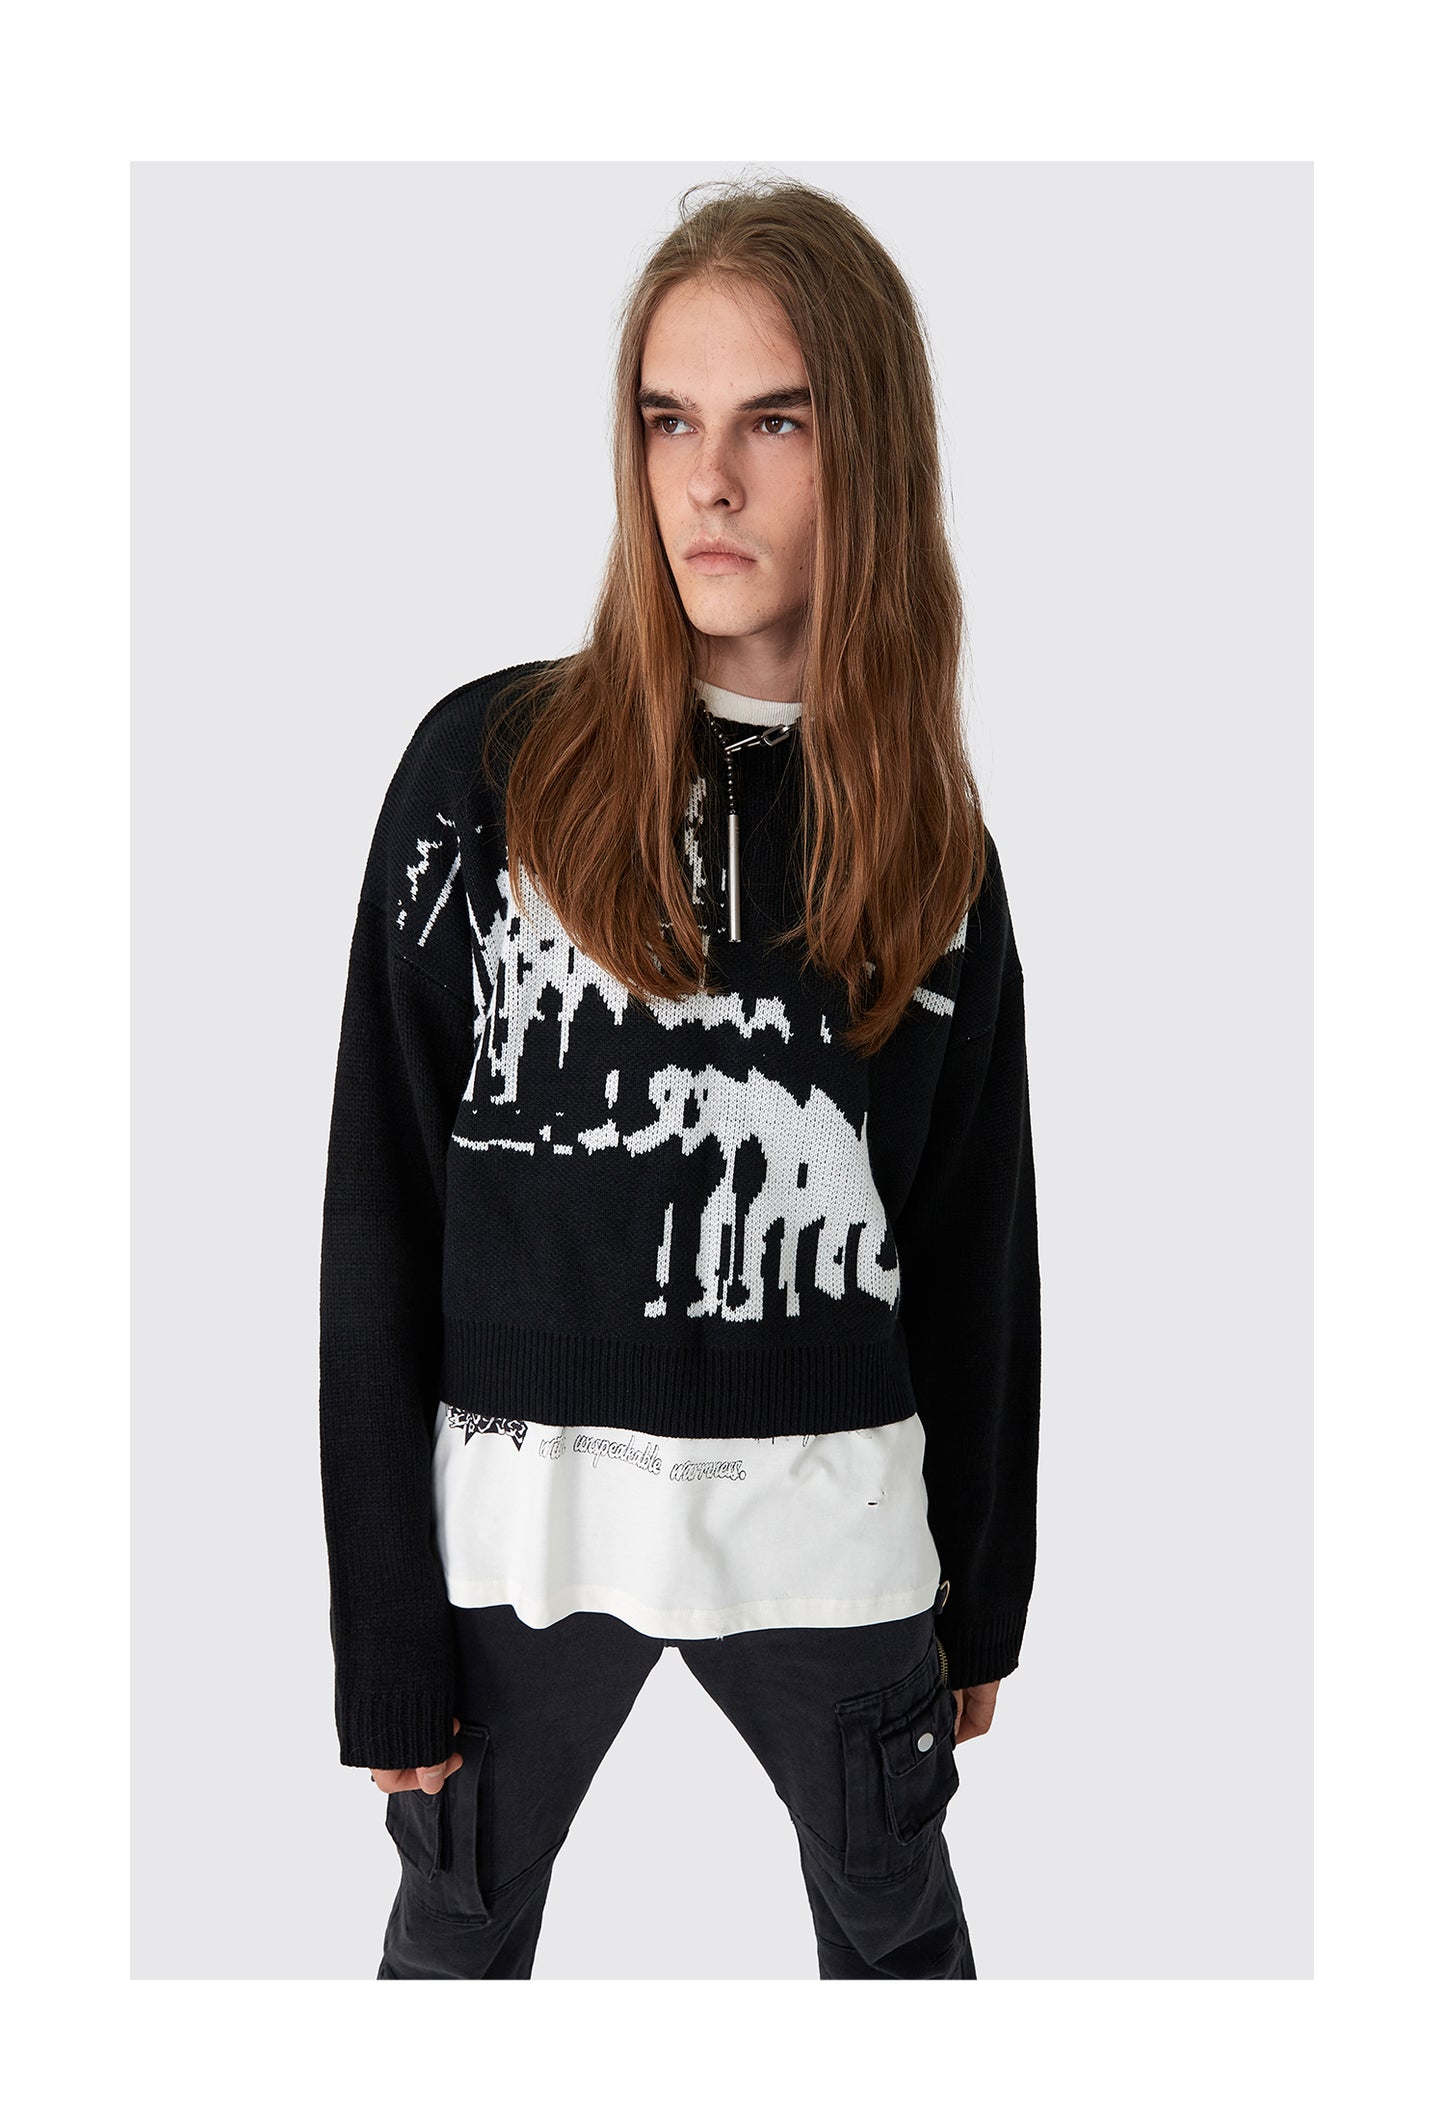 Black cardboard woven short sweater niche sweater